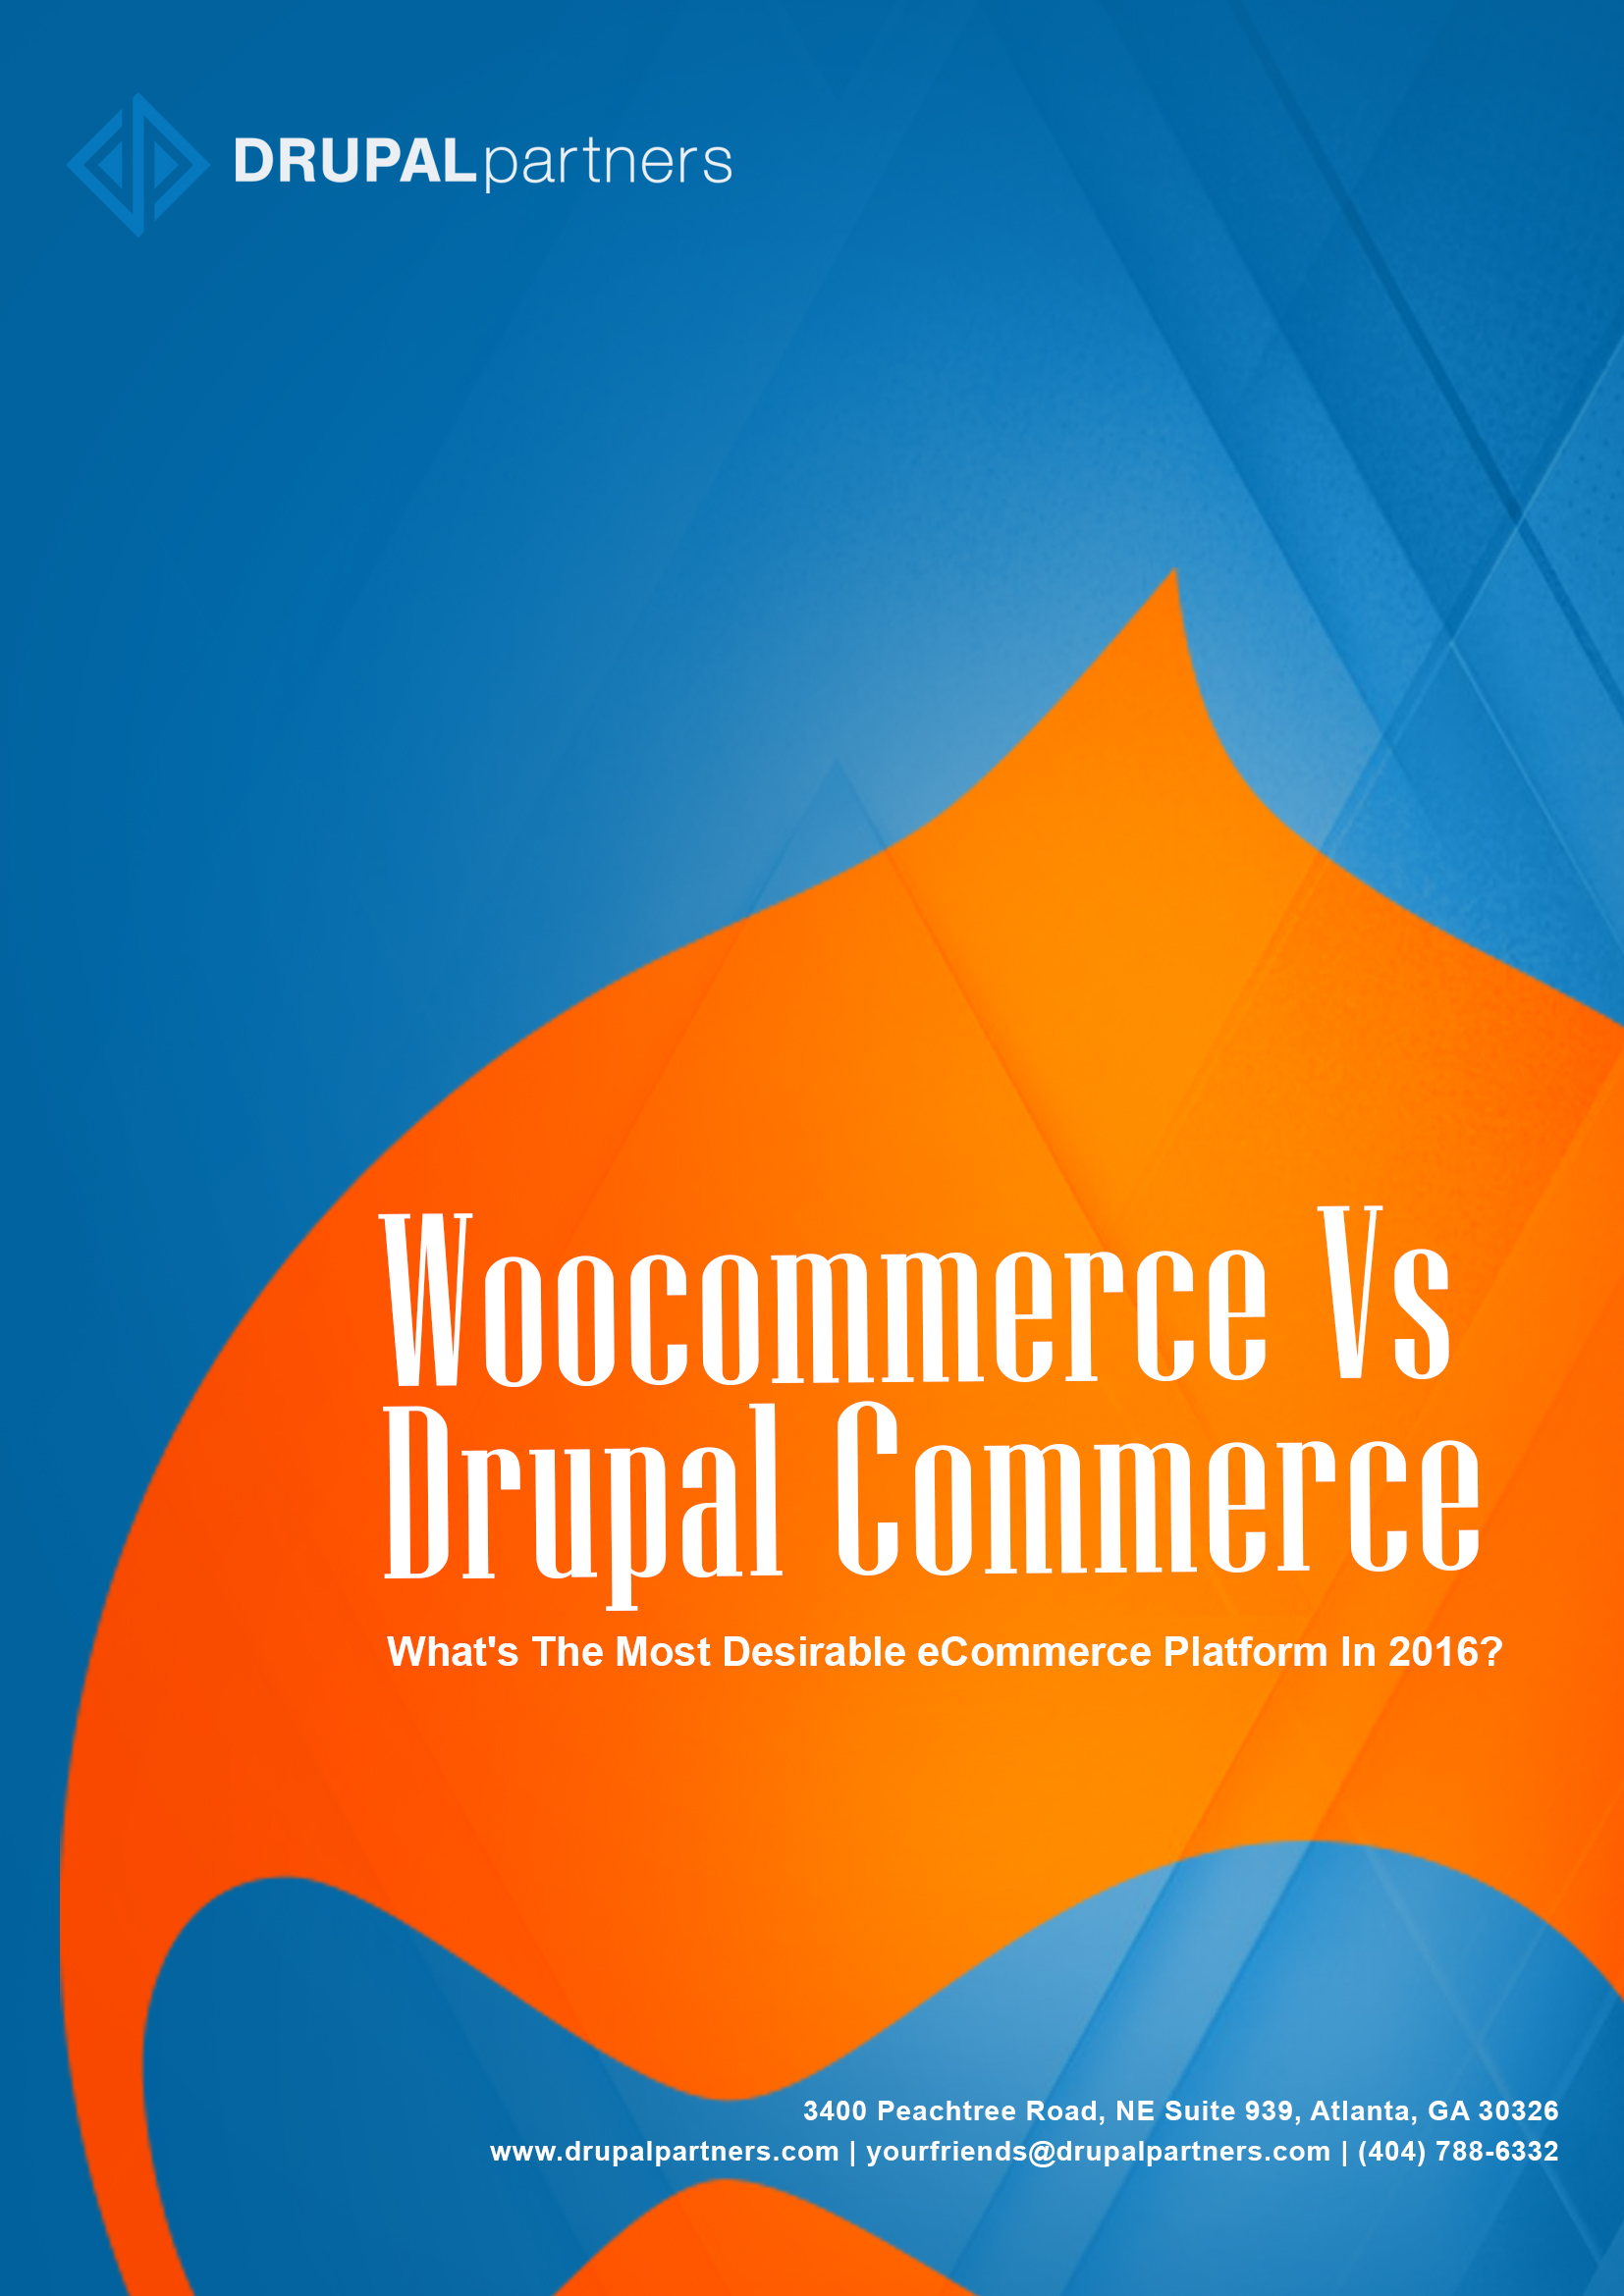 Woocommerce VS Drupal Commerce in 2016